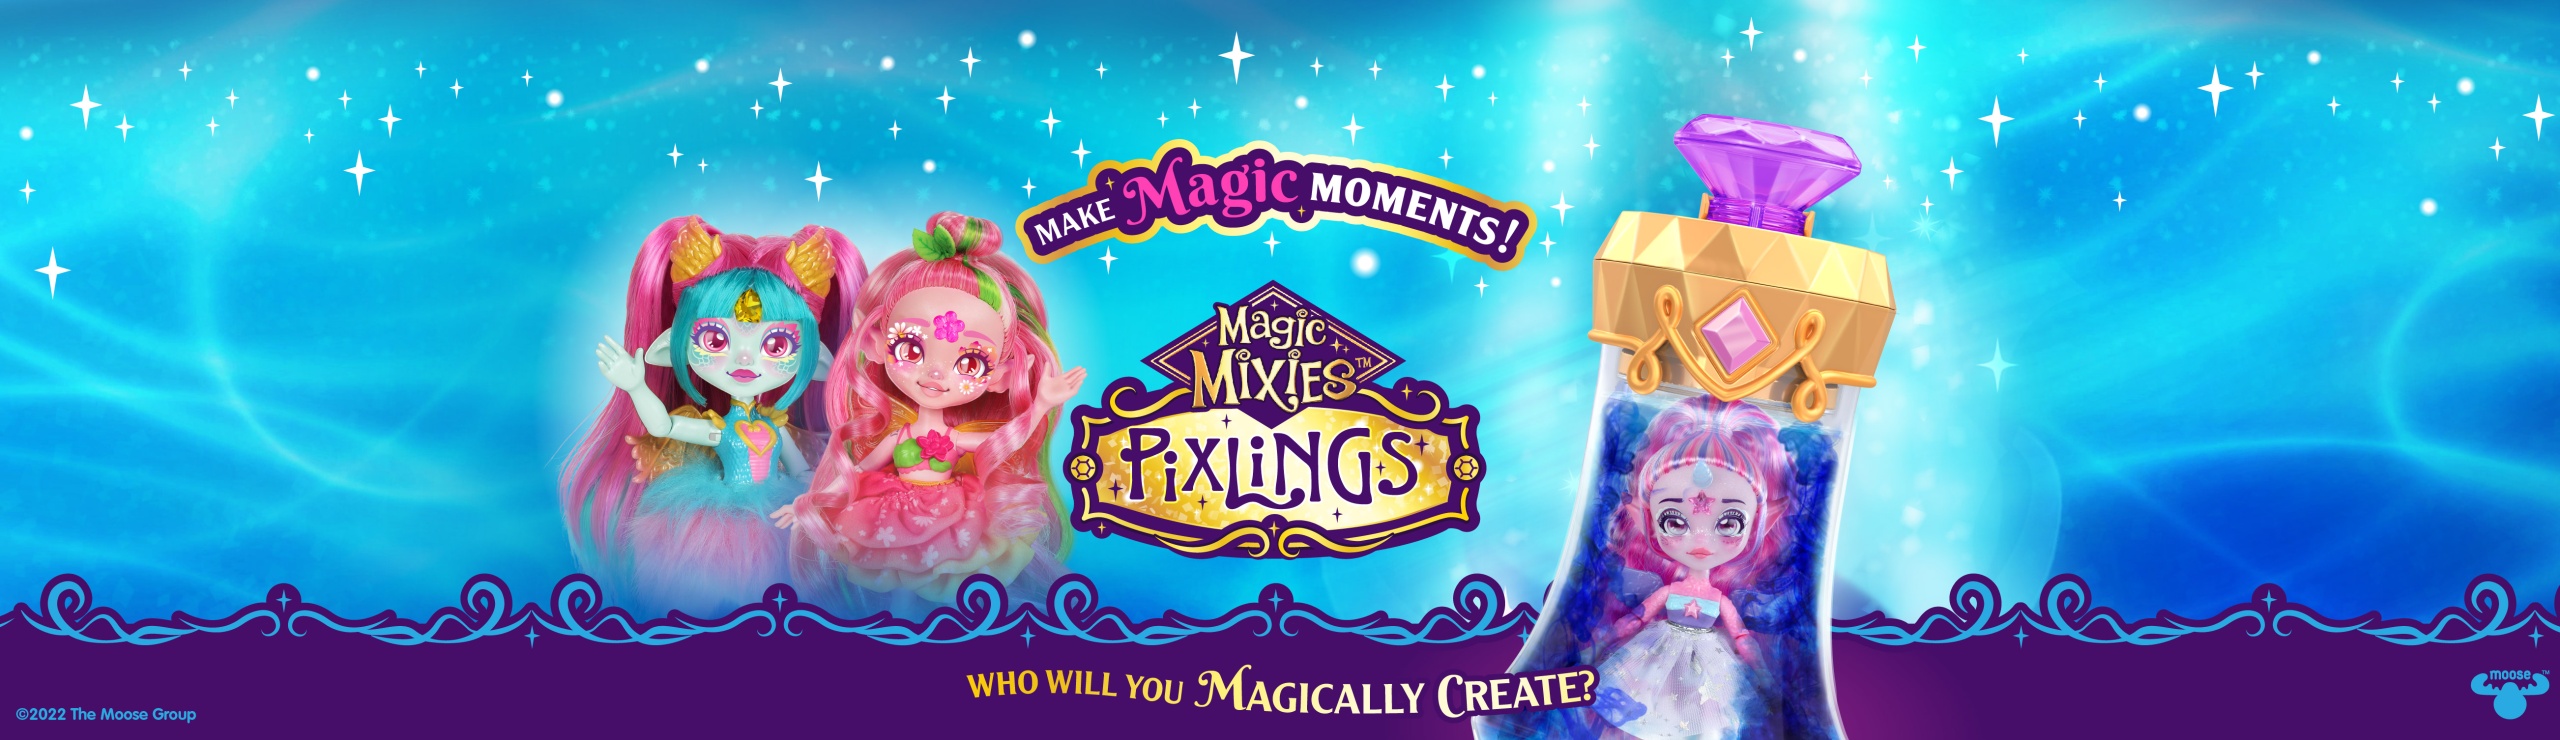 Magic Mixies Pixlings - Unia The Unicorn Pixling : Target